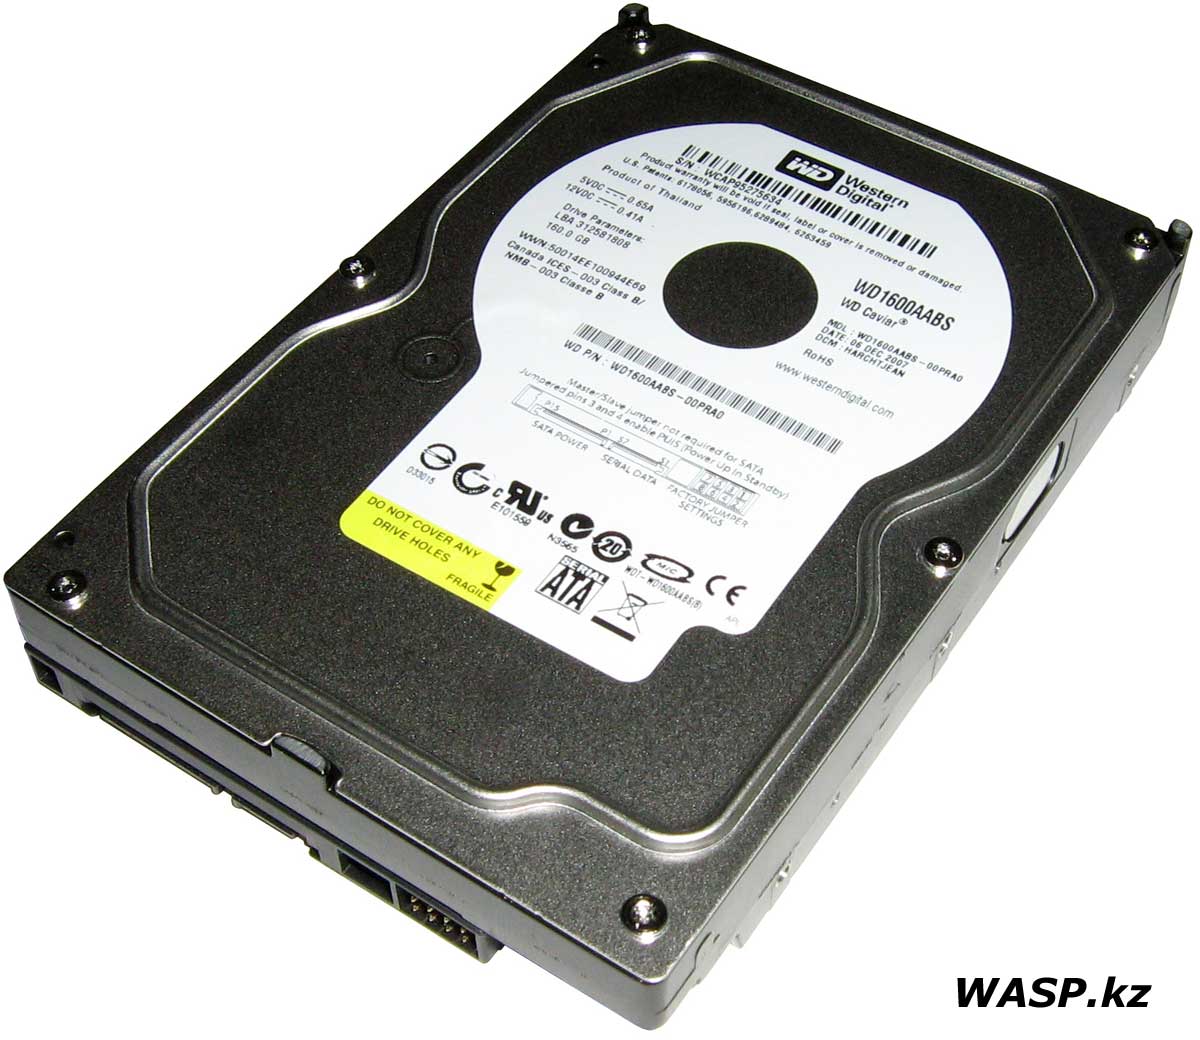 Жесткий диск Western Digital WD 1600AABS, 160GB, SATA-II серия Caviar